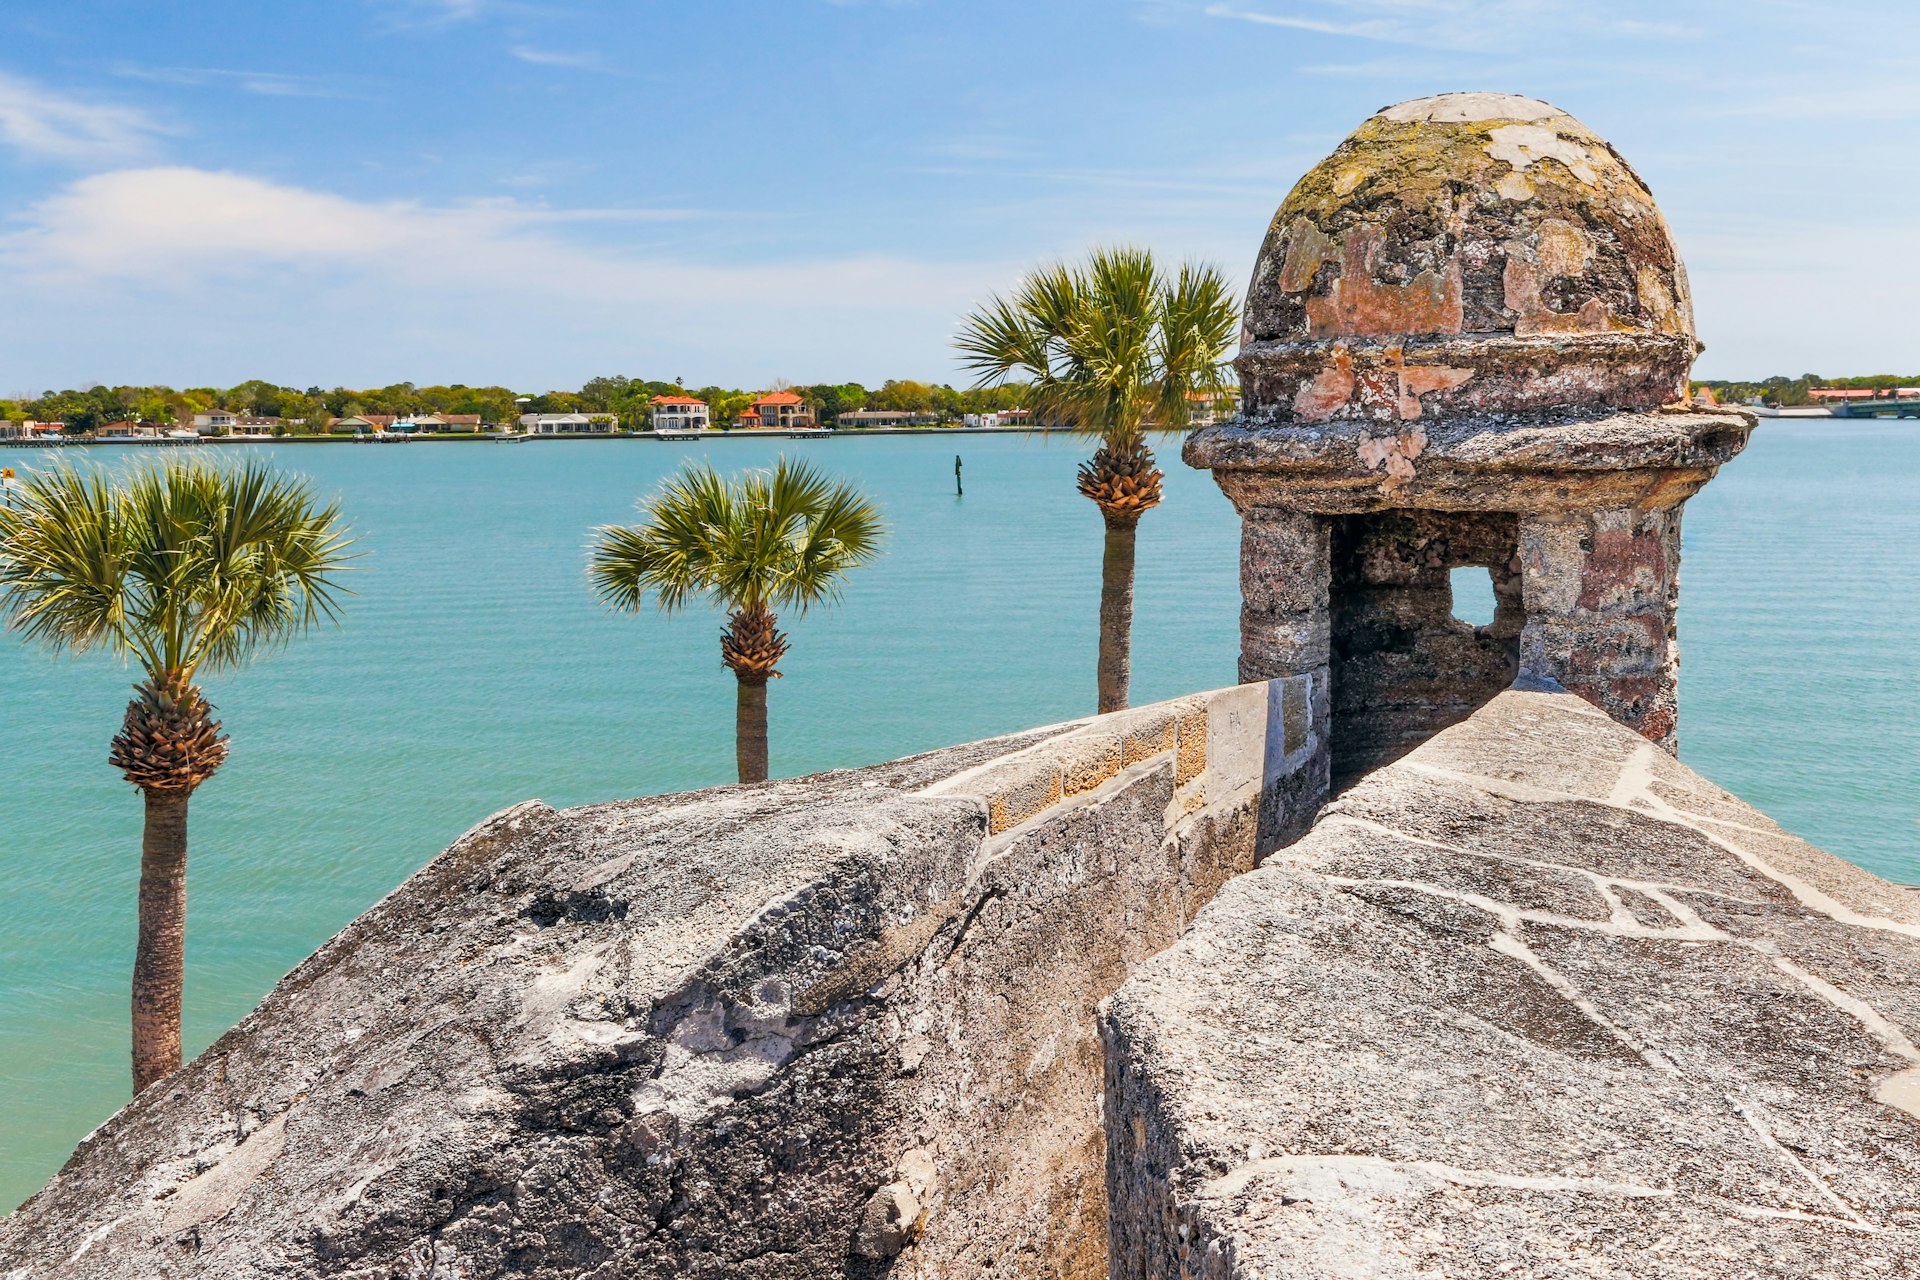 A sentry box turret overlooks Matanzas Bay at the Castillo de San Marcos, a seventeenth century Spanish Fort in Saint Augustine, Florida